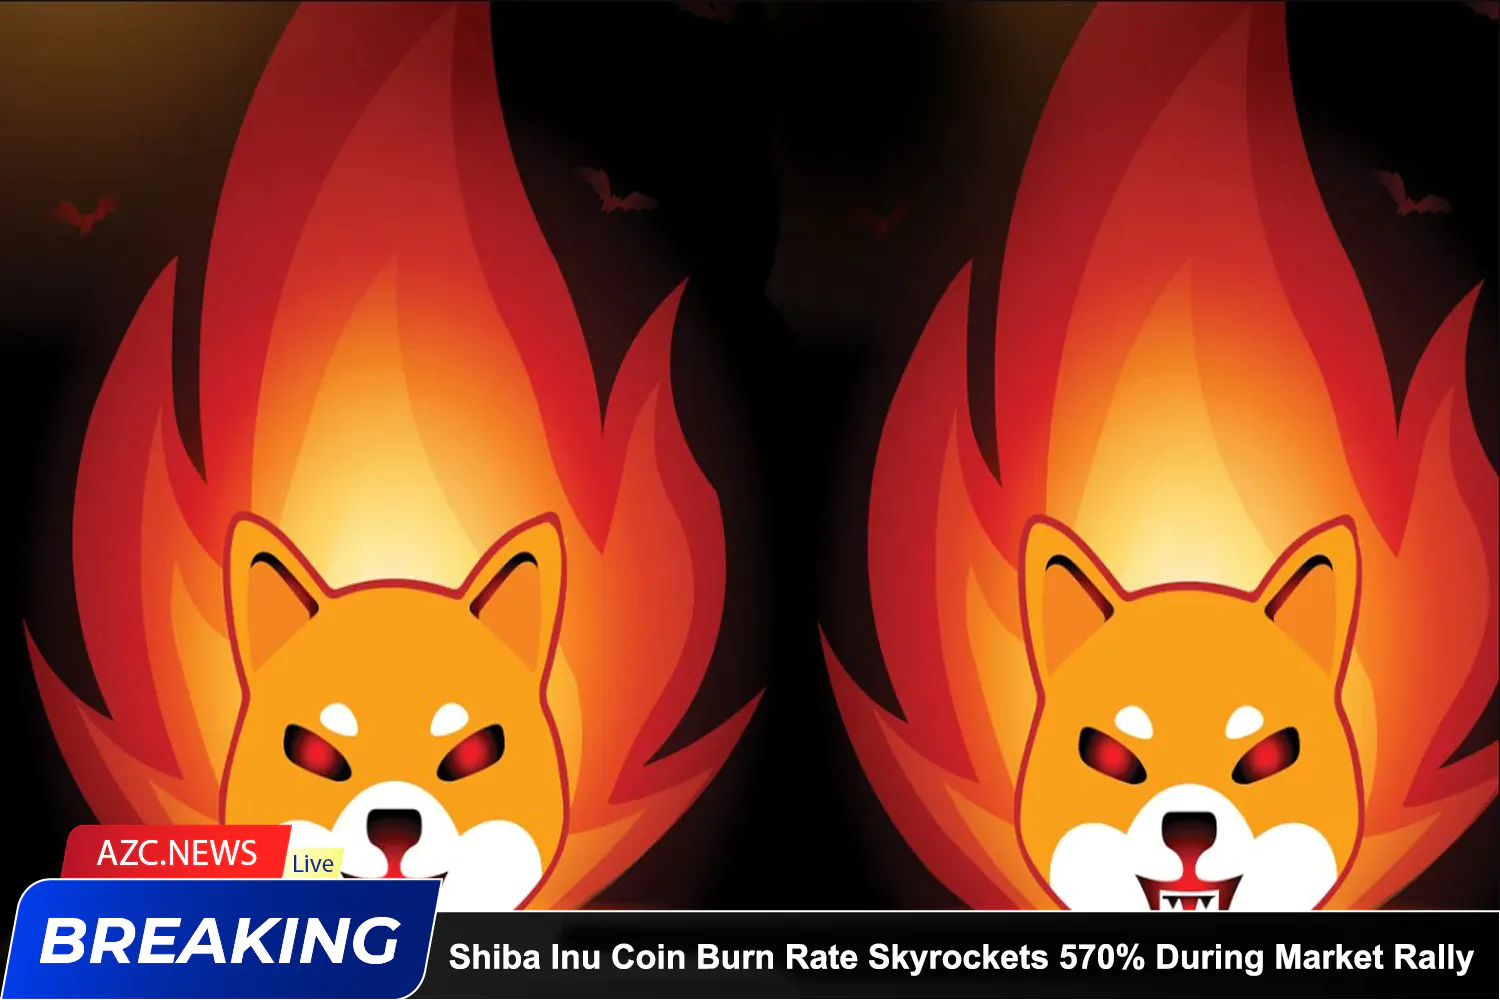 Azcnews Shiba Inu Coin Burn Rate Skyrockets 570% During Market Rally